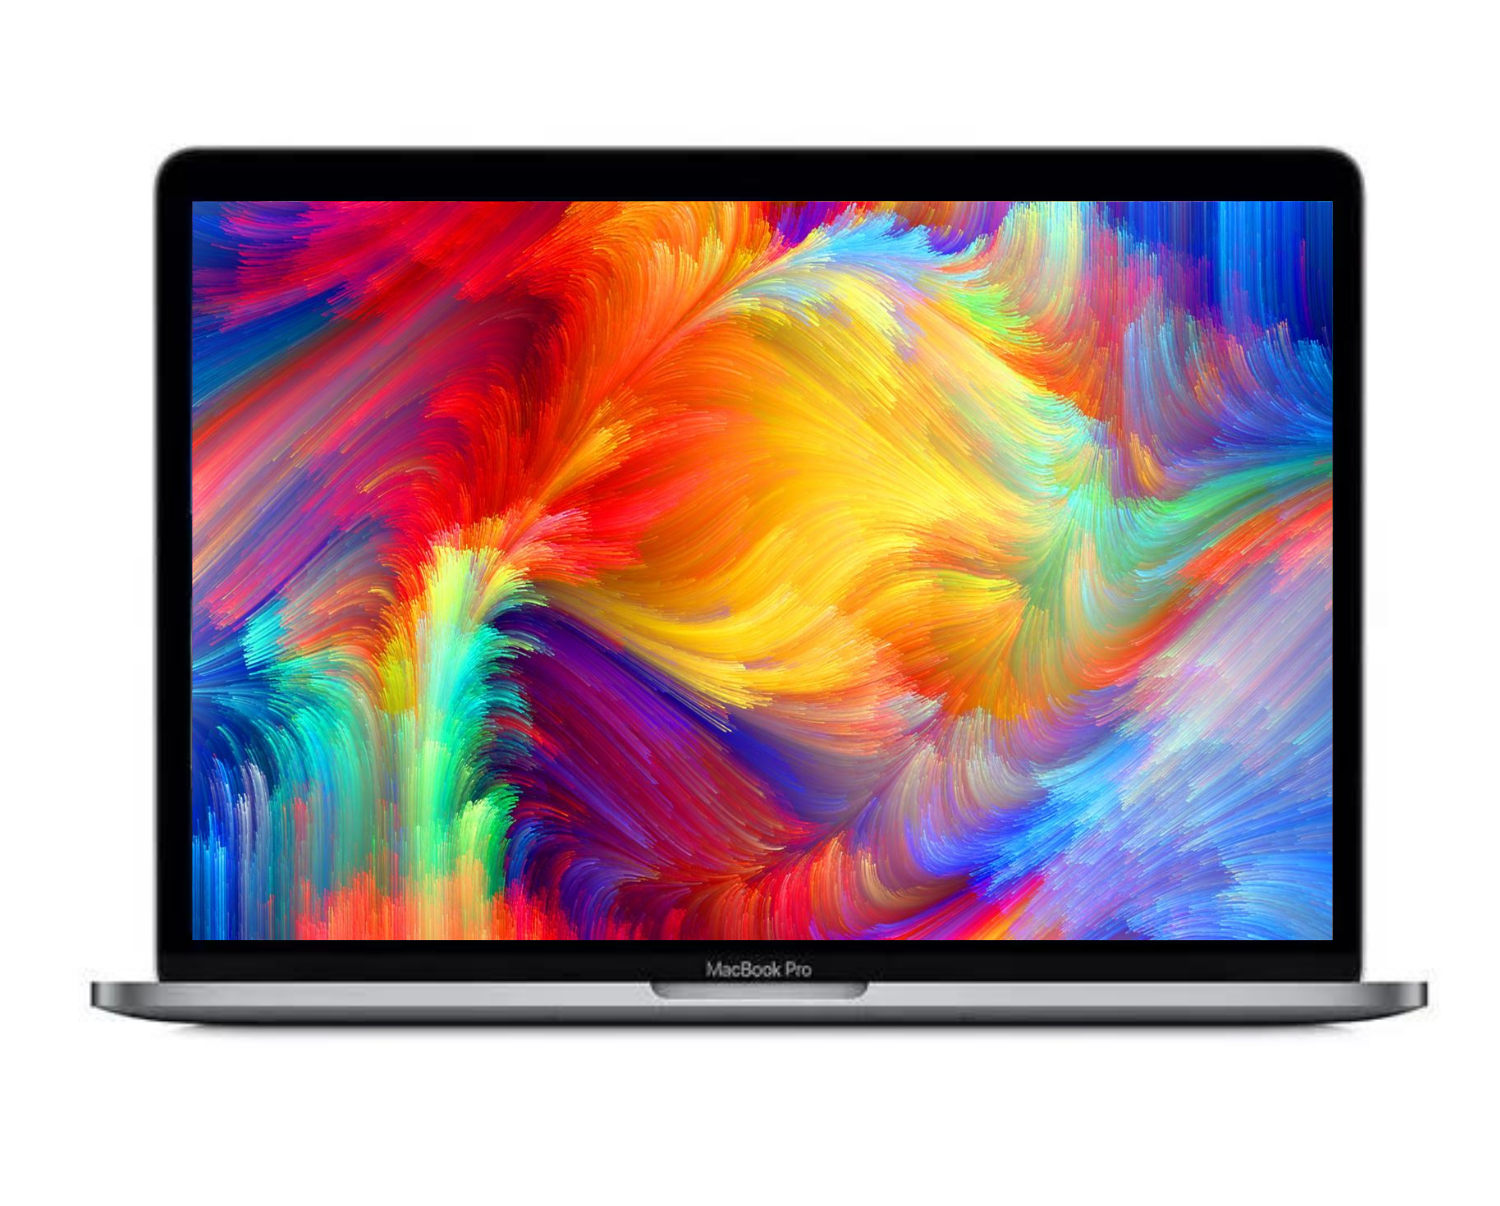 Macbook Pro 13 2017 i5 16gb 256gb